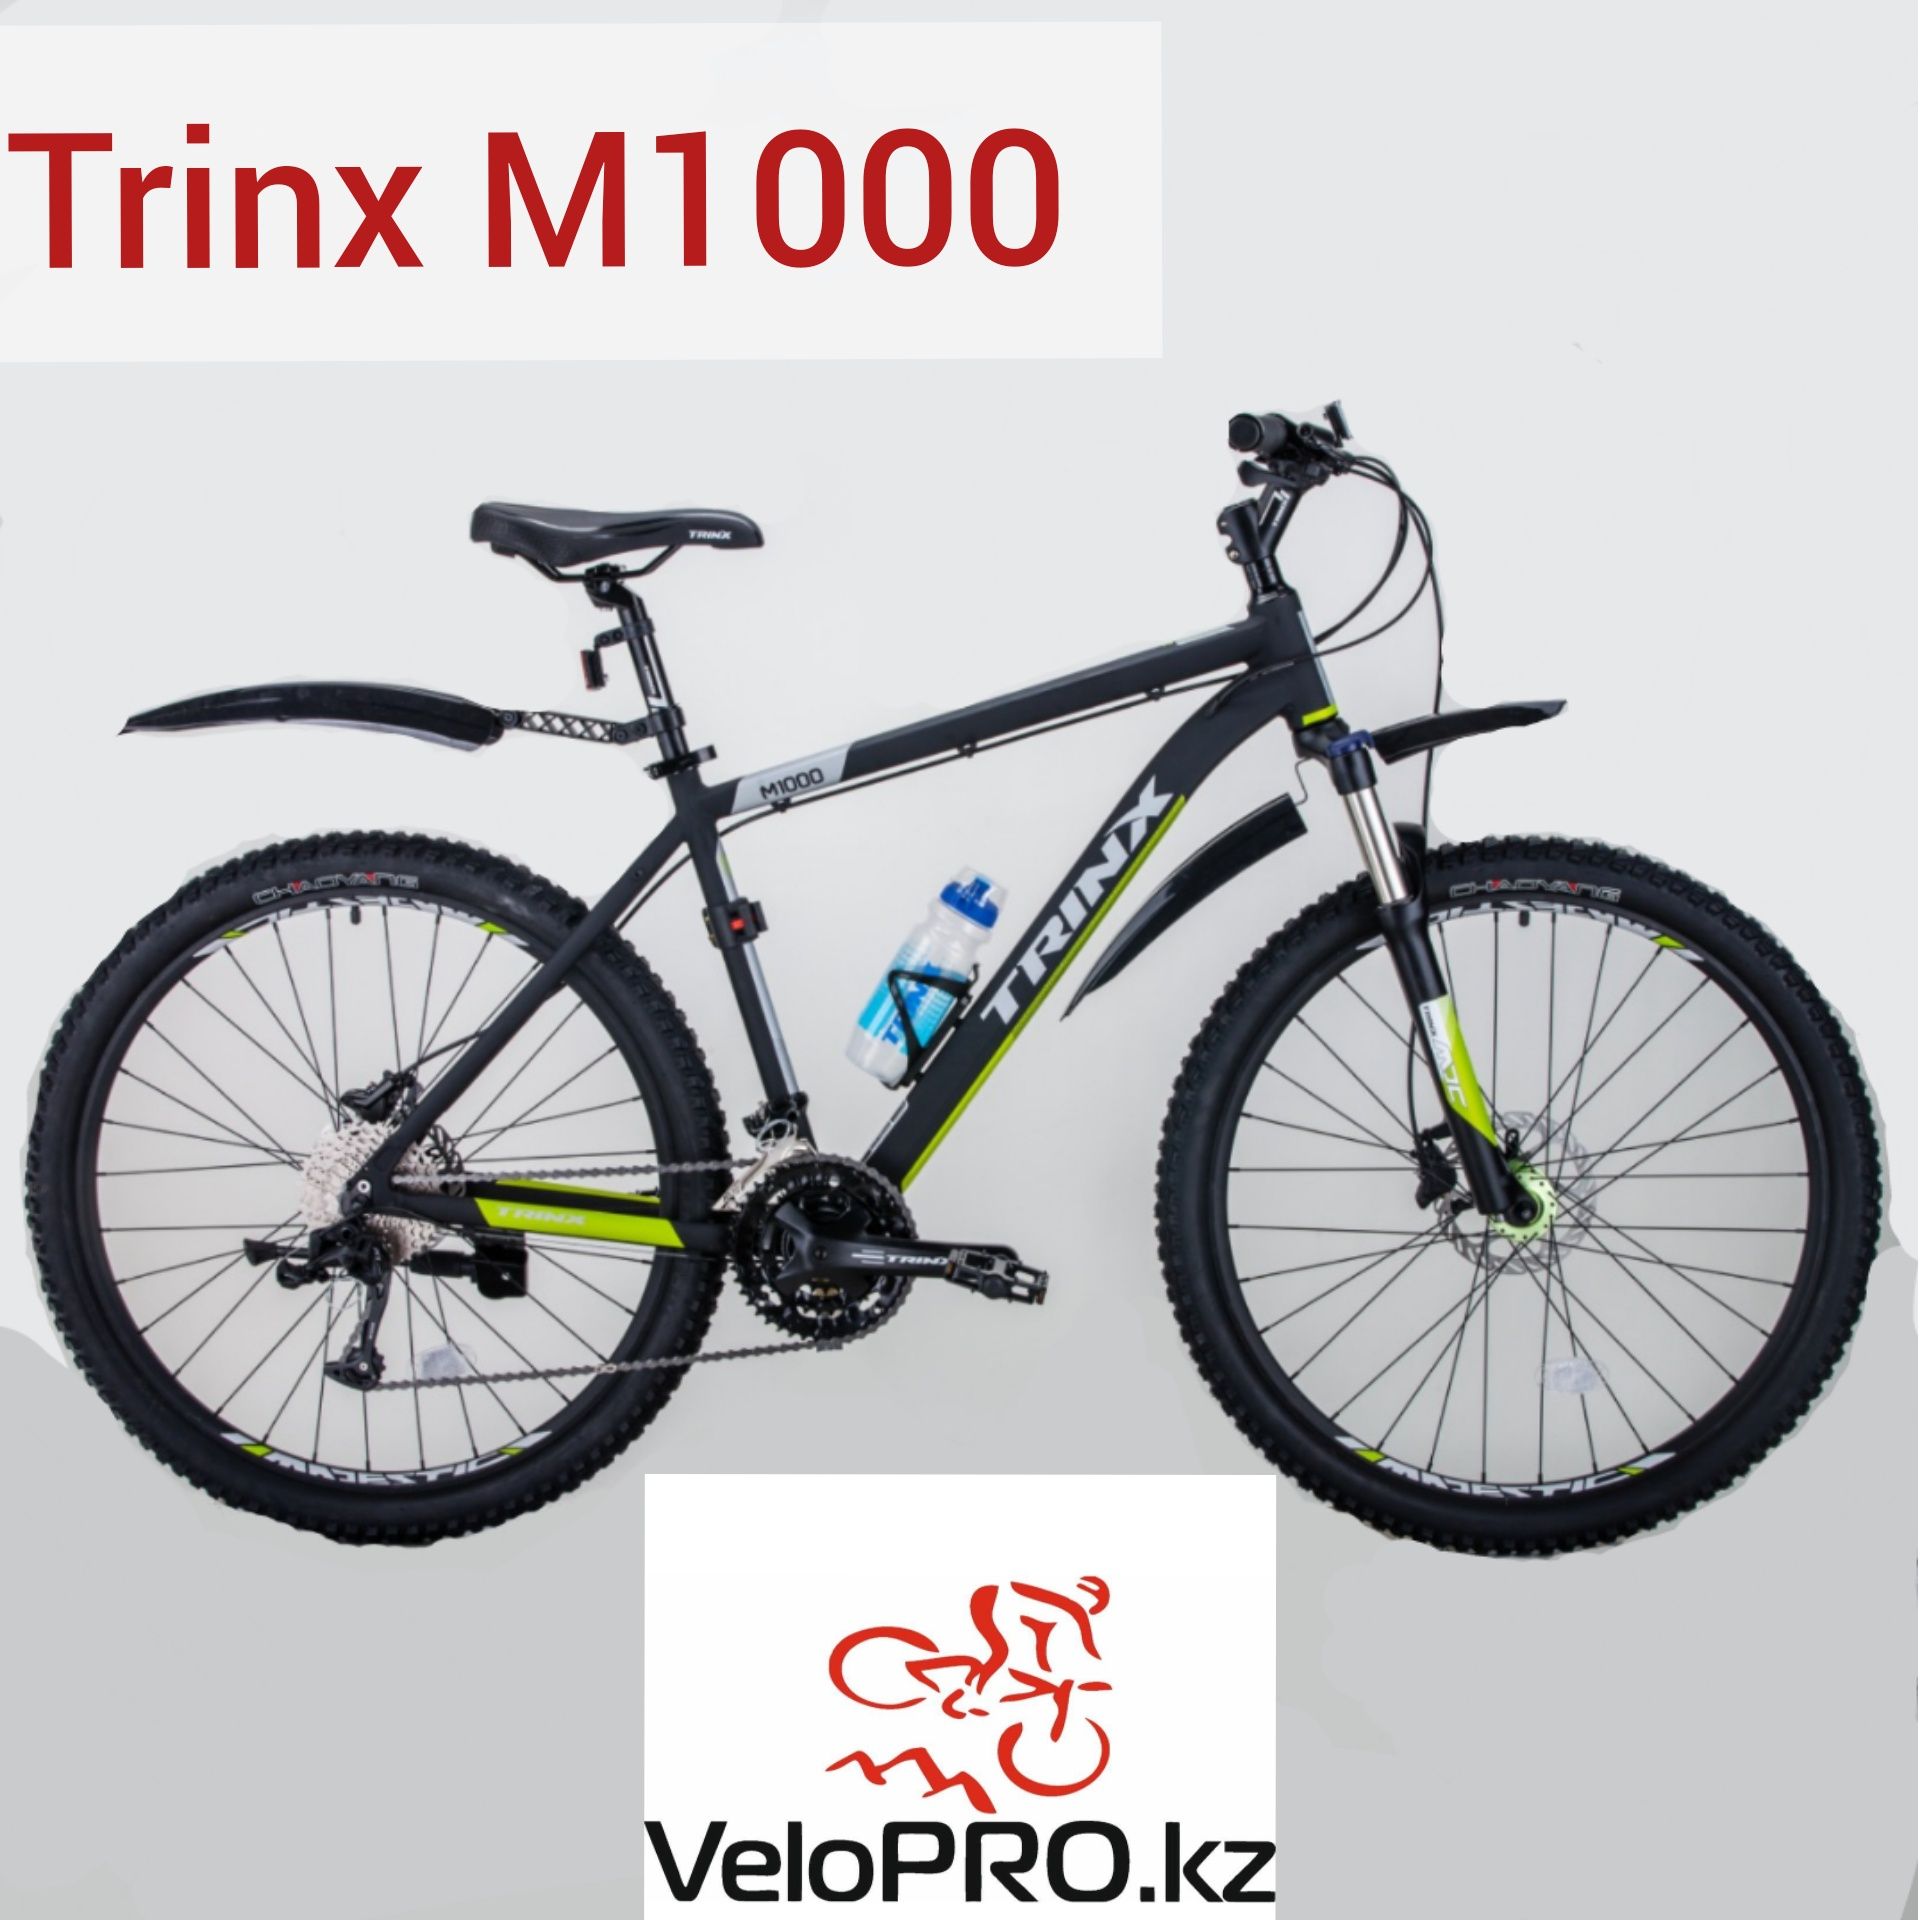 Велосипед Trinx junior 4.0 m139, Tempo, м500, m258. Гарантия. Кредит.